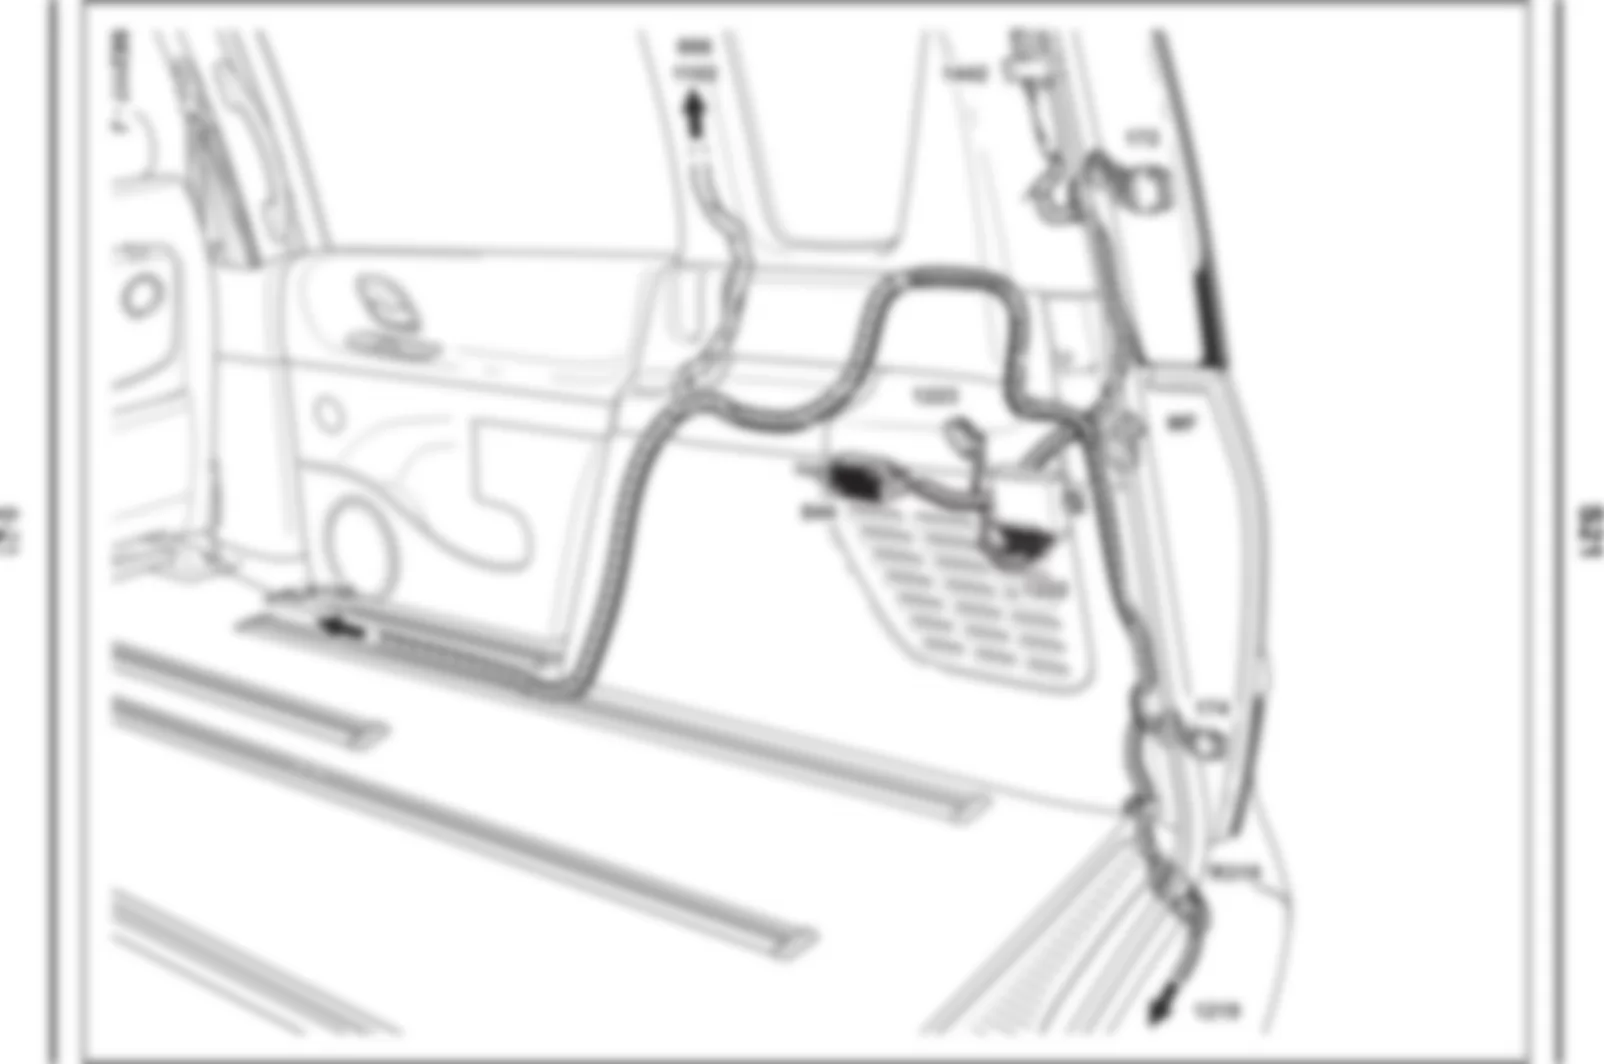 Где находится 844 - ЭЛДВИГ. ПРИВОДА ЗАМКА ЛЮЧКА ЗАЛИВНОЙ ГОРЛОВИНЫ БАКА для Renault Espace IV 2002-2014